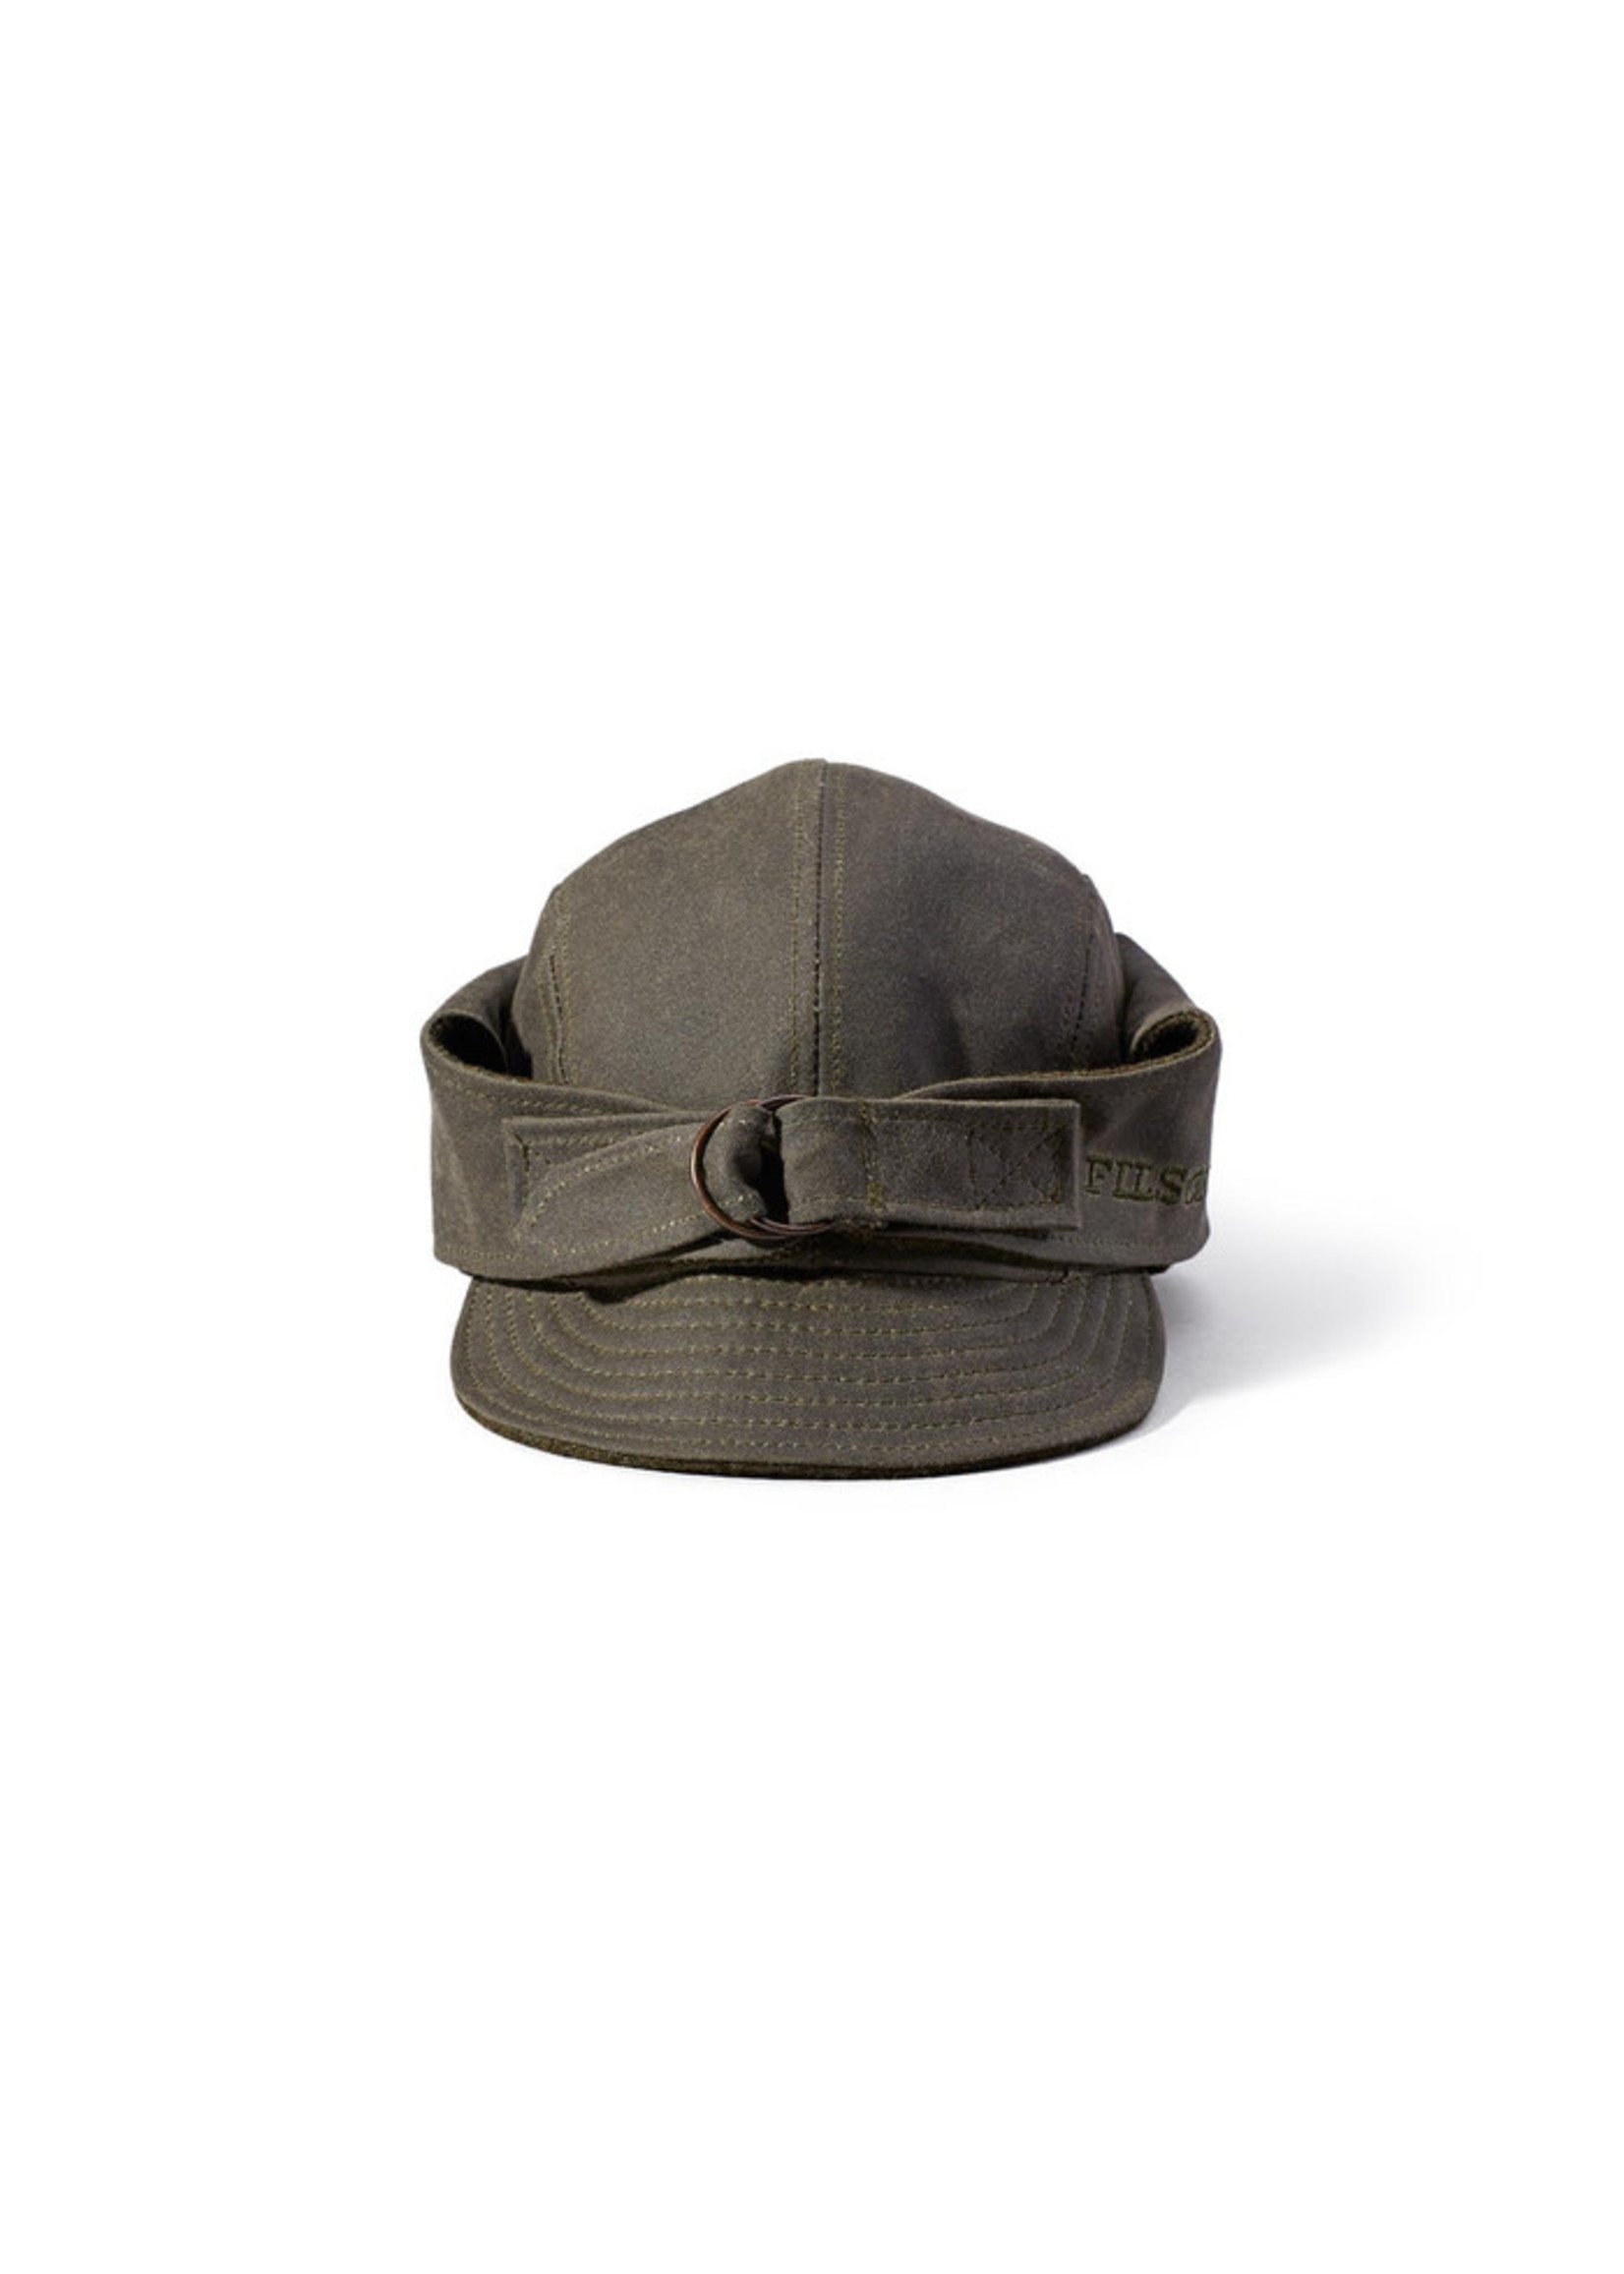 Filson Tin Cloth Wildfowl Hat: OtterGreen